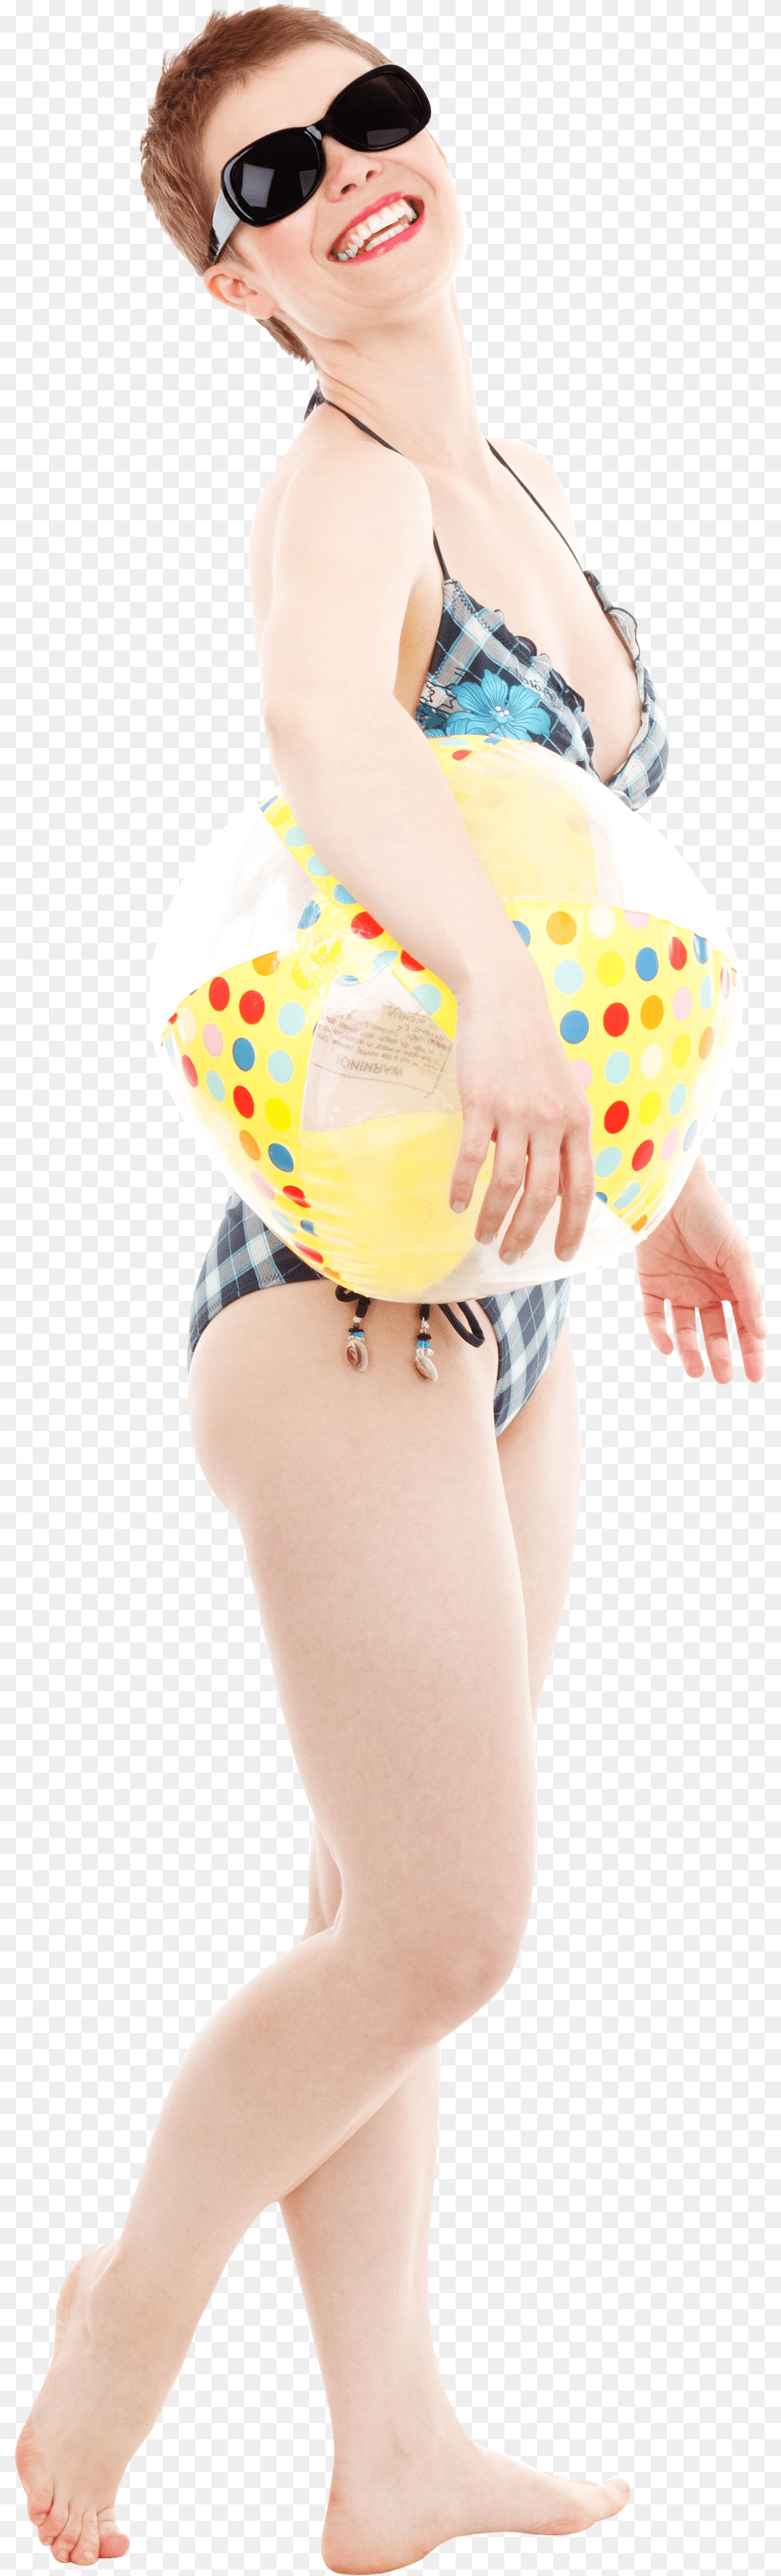 Sexy Beach Ball Cartoon Girl, Woman, Swimwear, Person, Hand Free Png Download